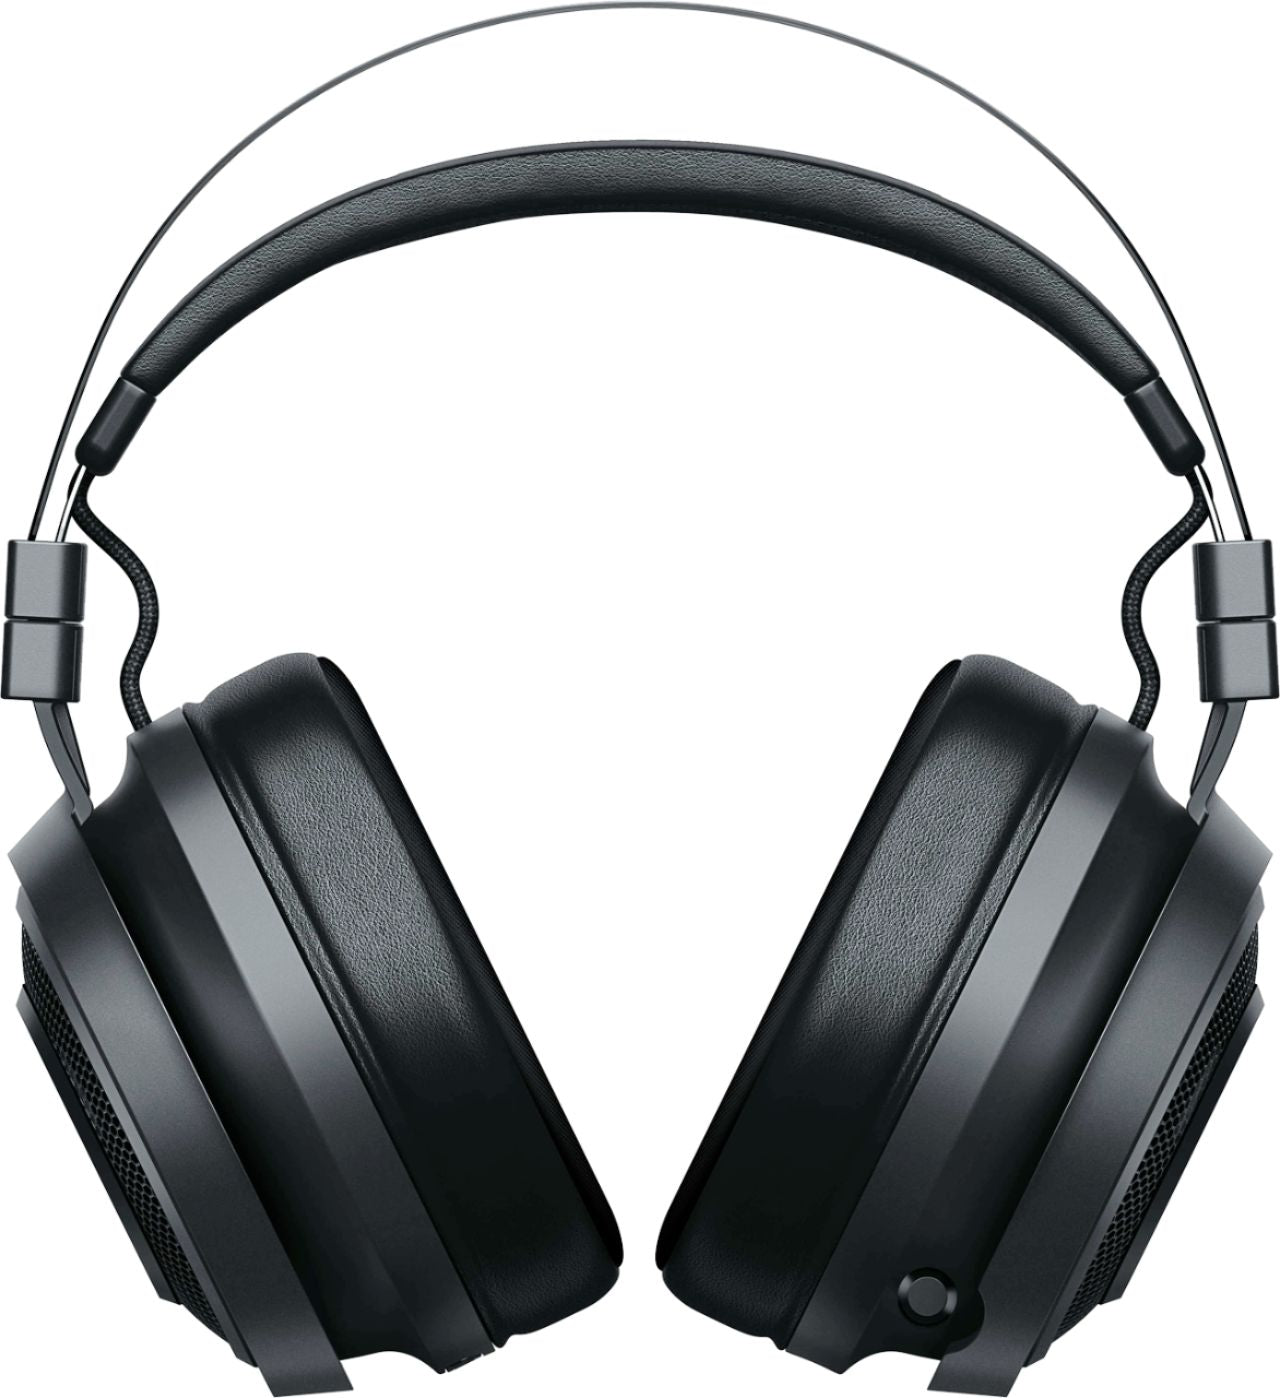 Official Razer - Nari Ultimate Wireless Audio Gaming Headset